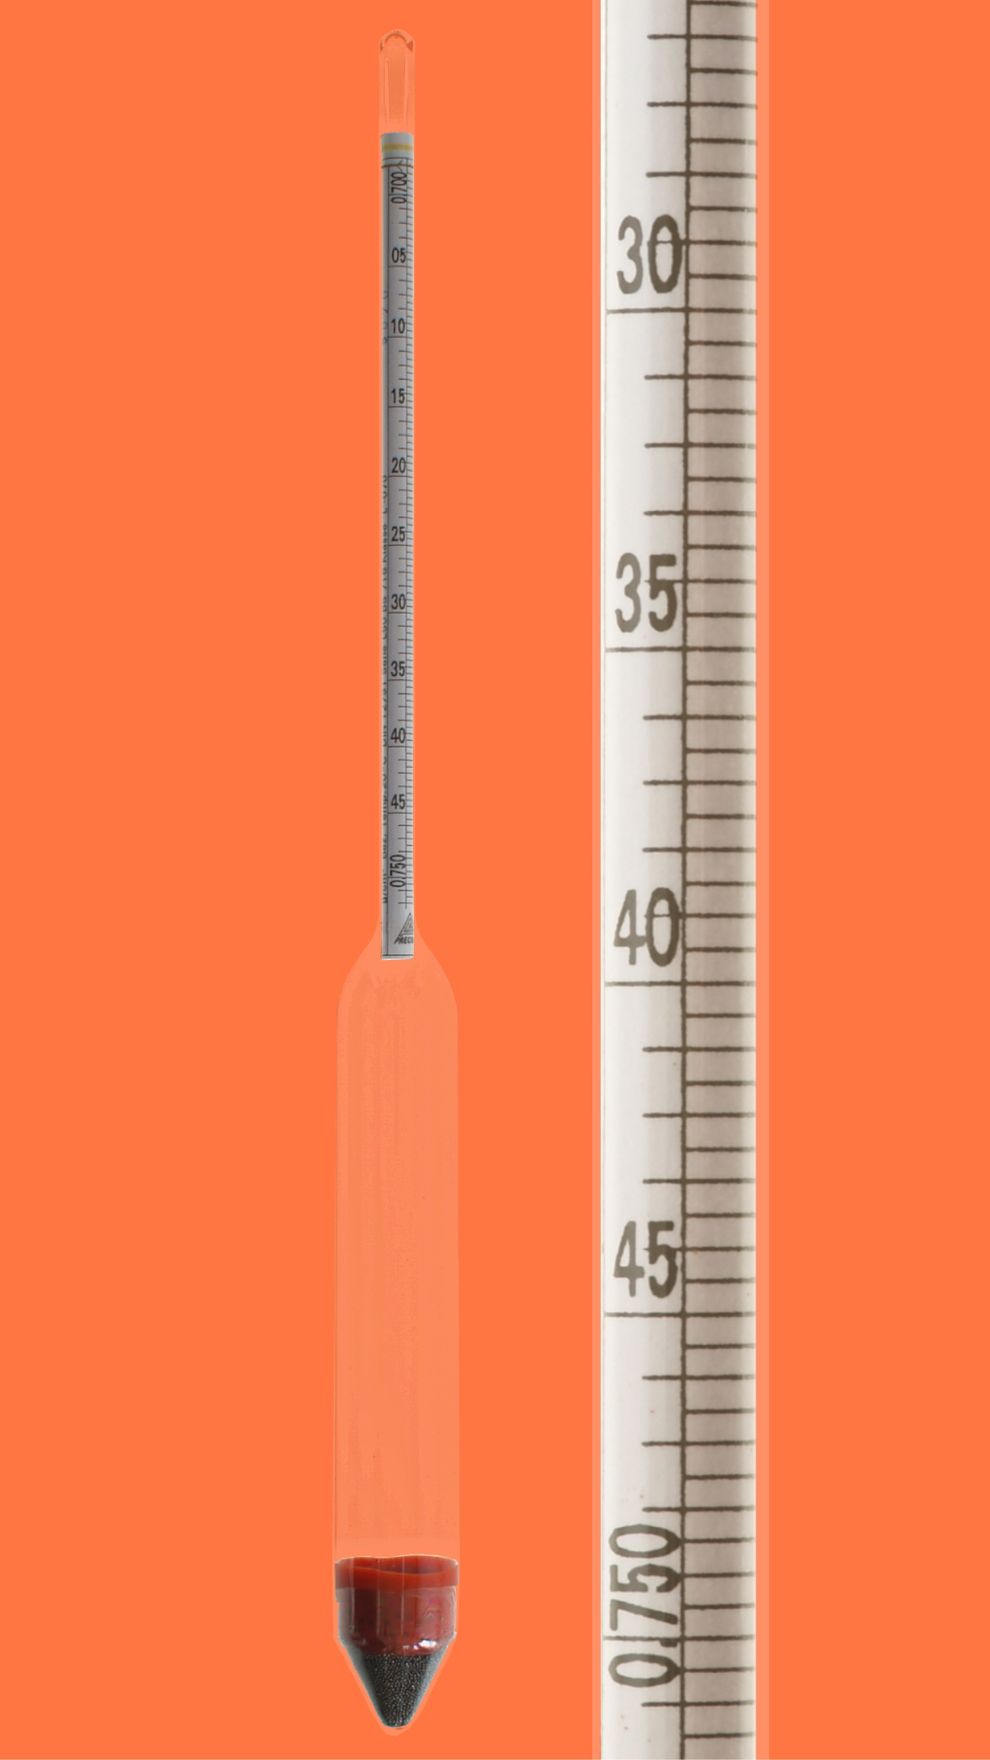 Aräometer, DIN 12791, L50, 1,80-1,85:0,0005g/cm³, Bezugstemp. 20°C, ohne Thermometer